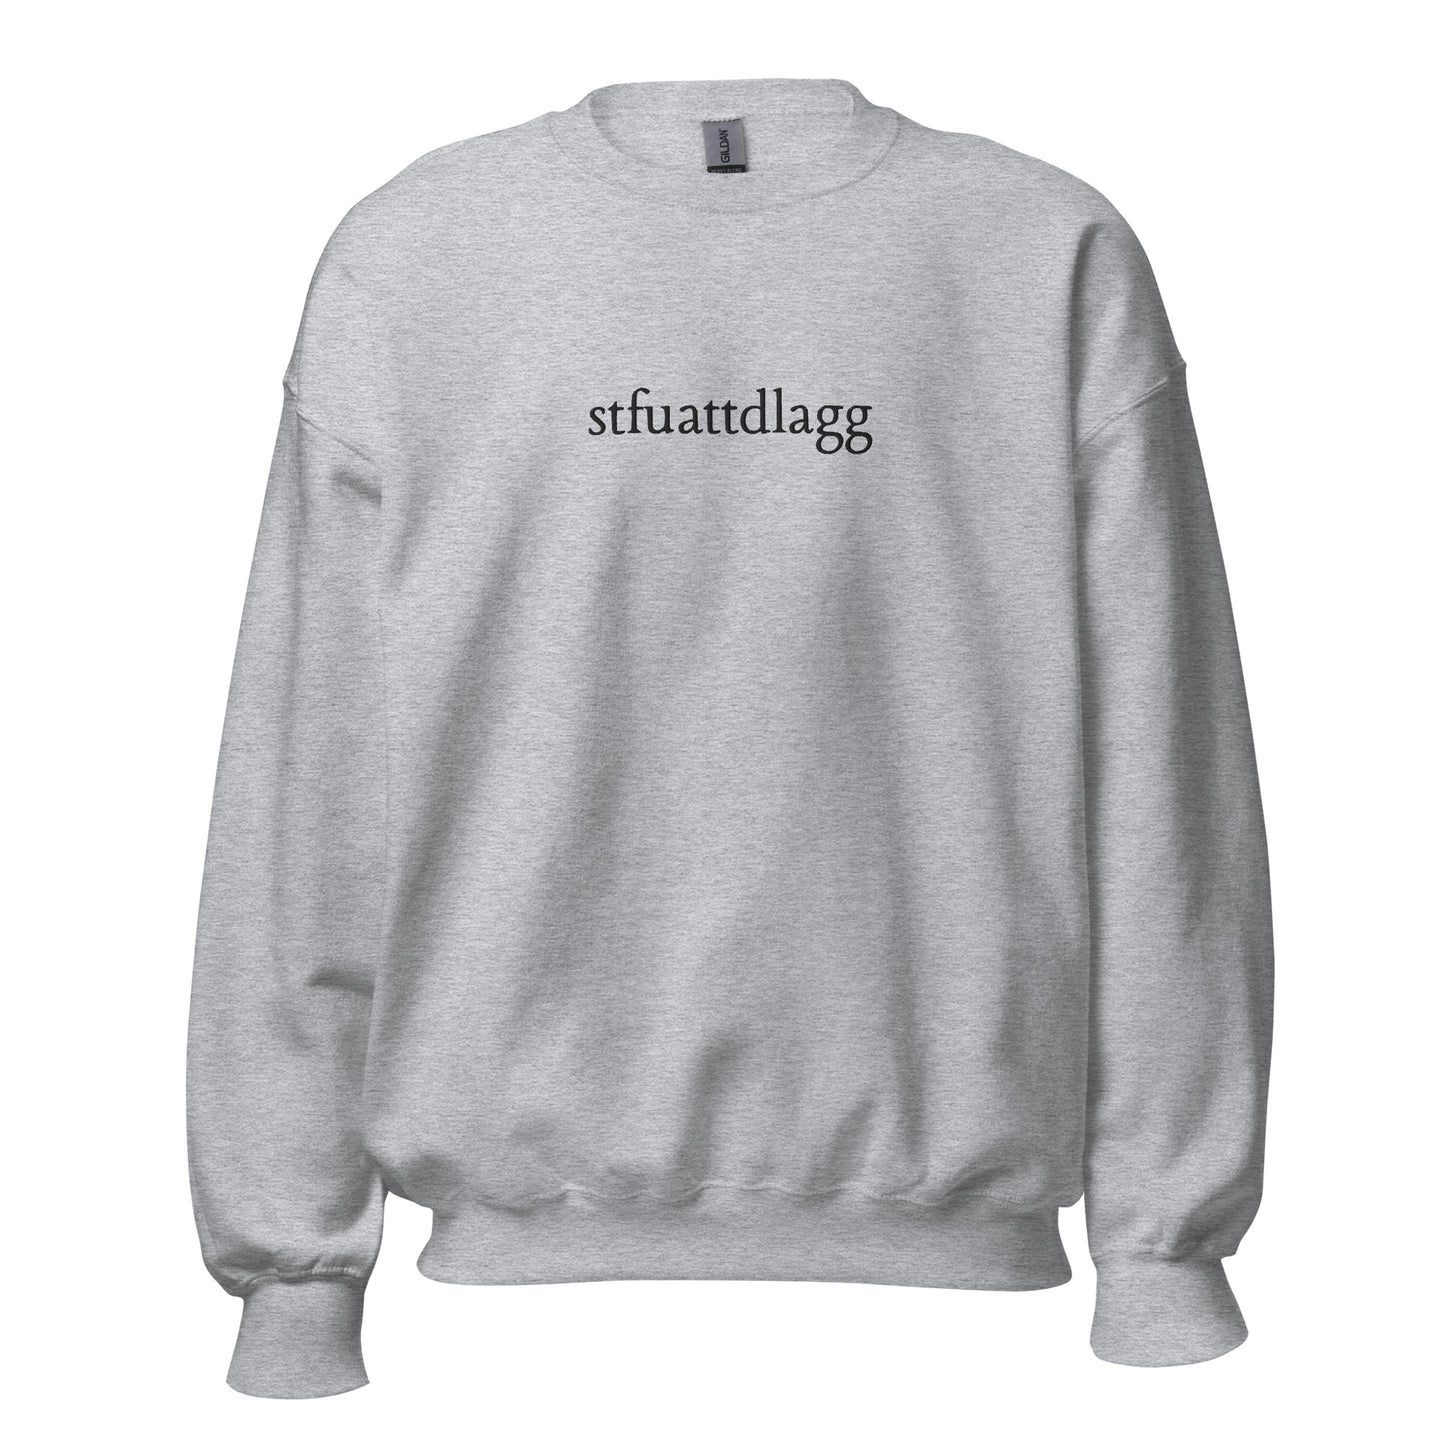 STFUATTDLAGG embroidered sweatshirt